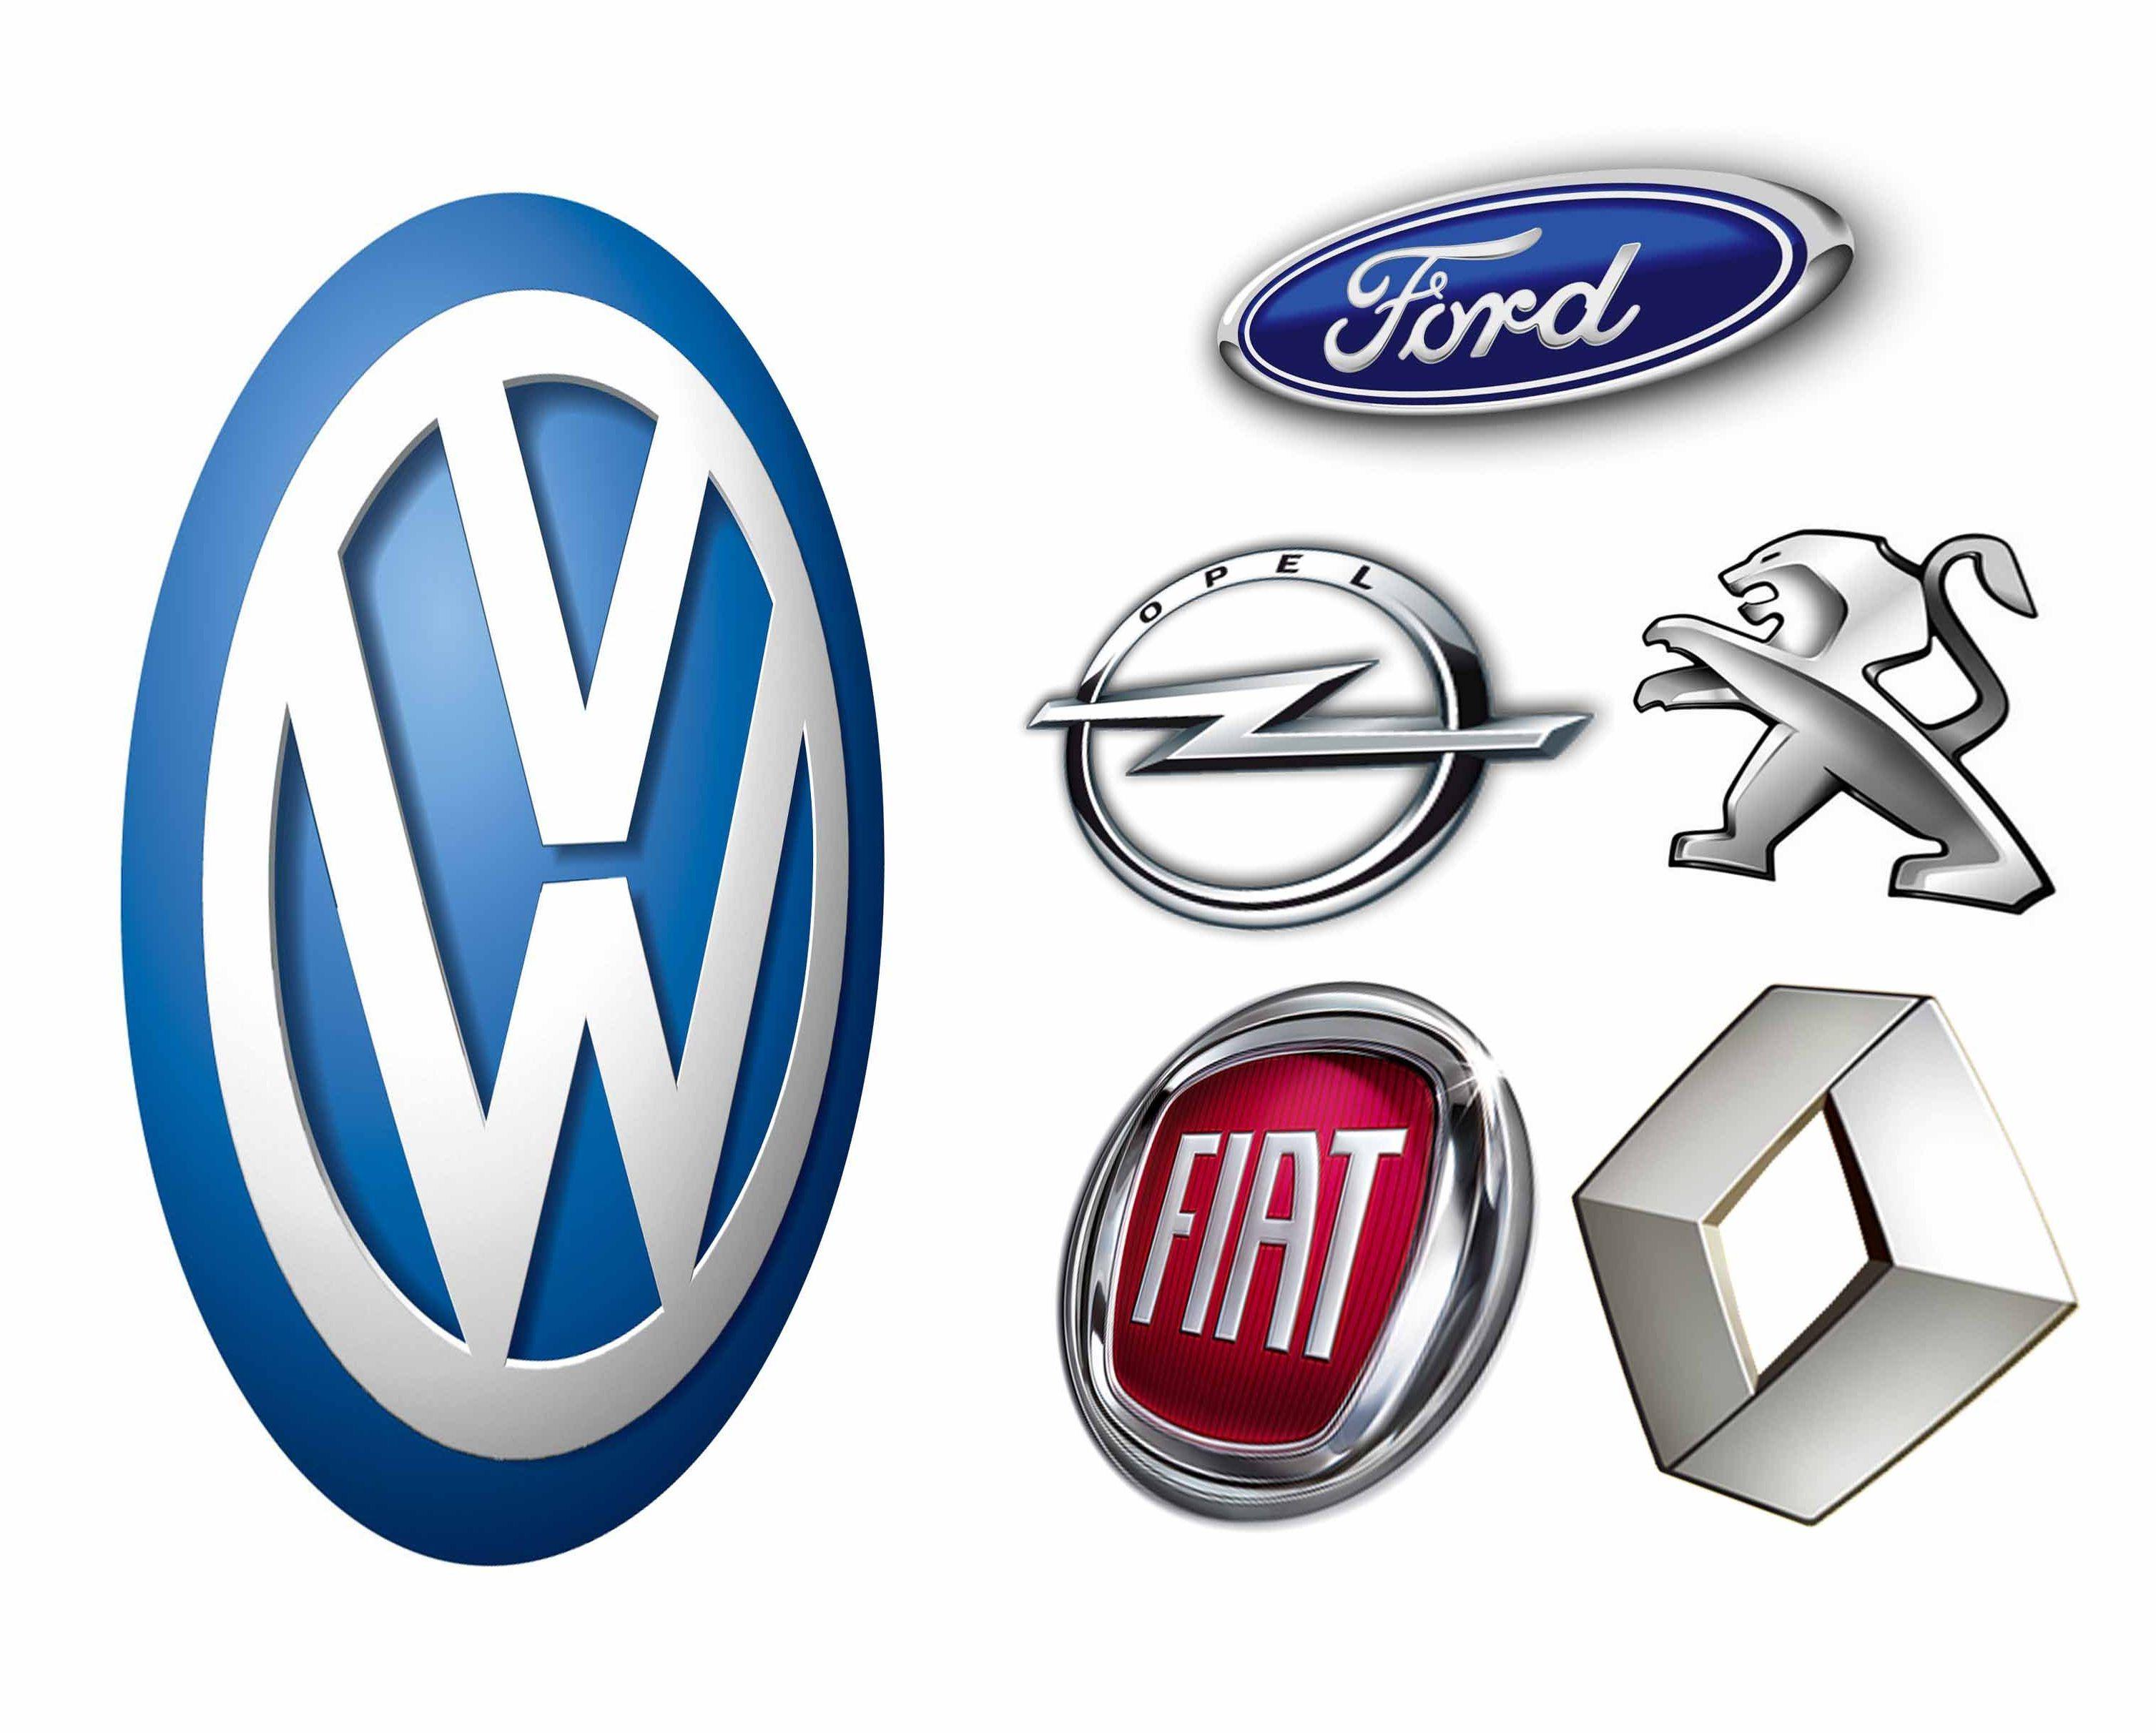 European Car Part Manufacturer Logo - European car industry crisis. A possible solution?. Fiat Group's World